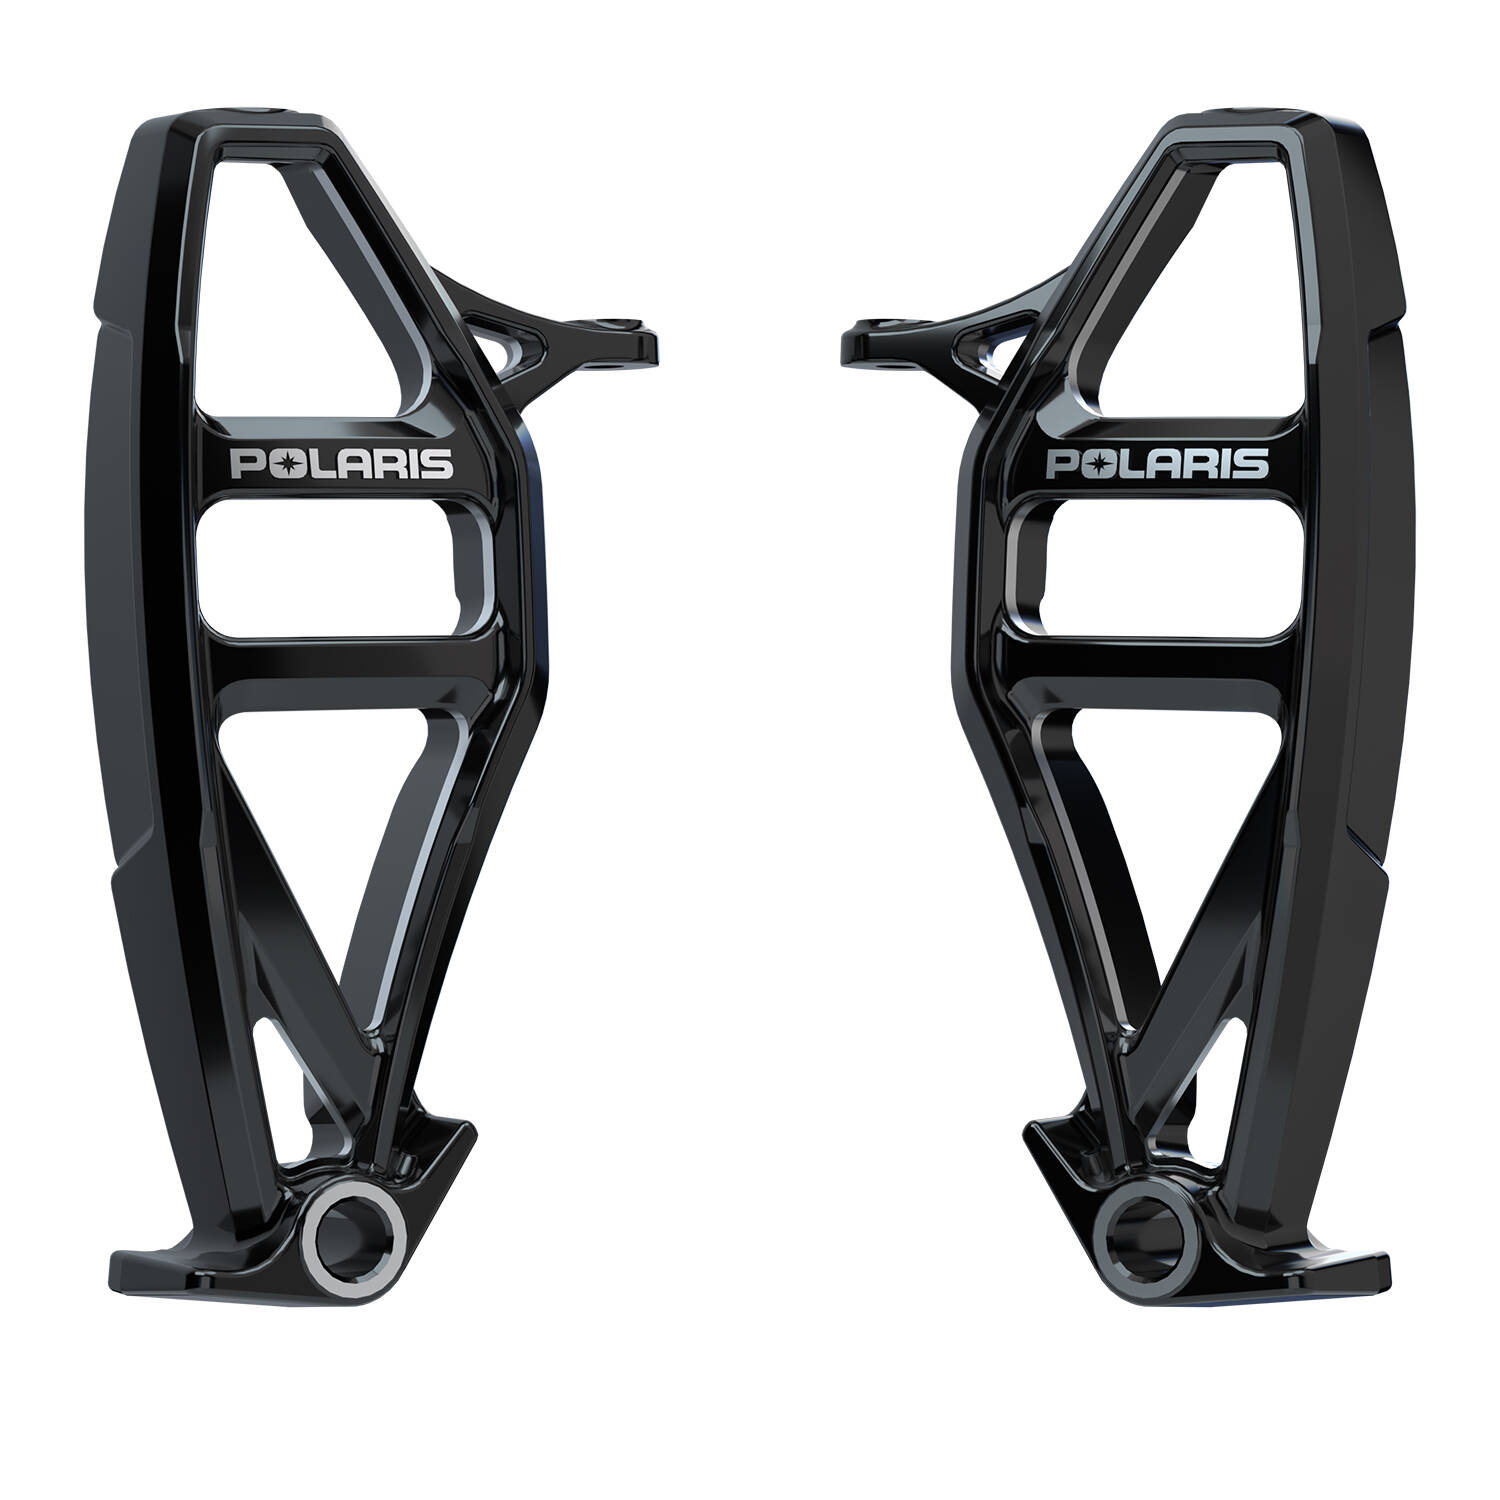 Polaris 1823897 Lefthand Metric Spindle 2013-2019 Pro RMK Snowmobile 